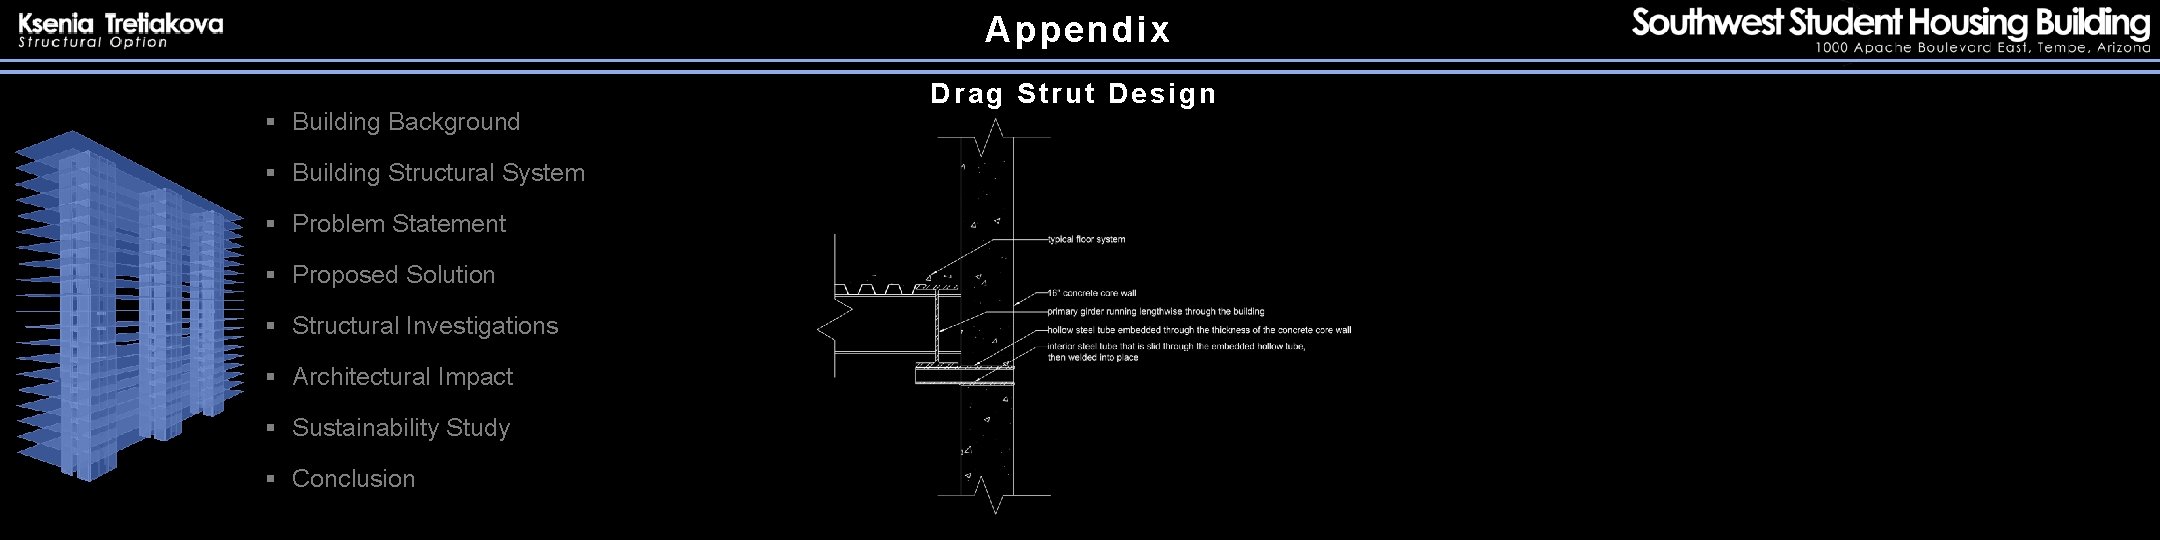 Appendix § Building Background § Building Structural System § Problem Statement § Proposed Solution